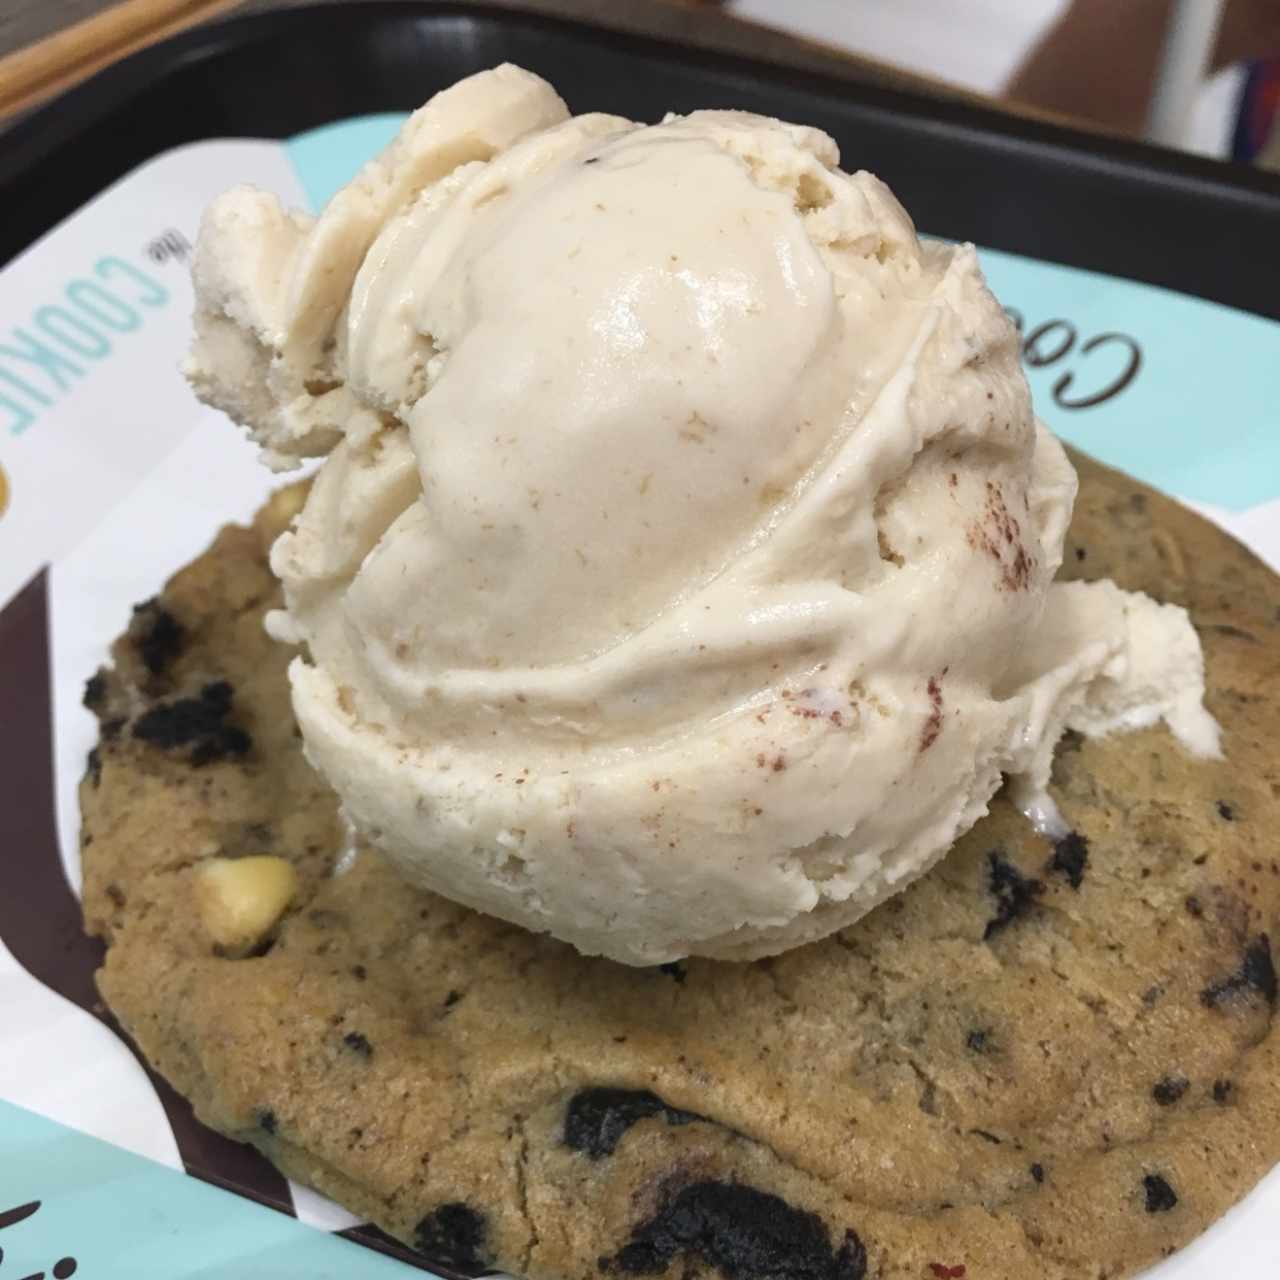 Galleta XL de Cookies and Cream con helado de Banana Crunch